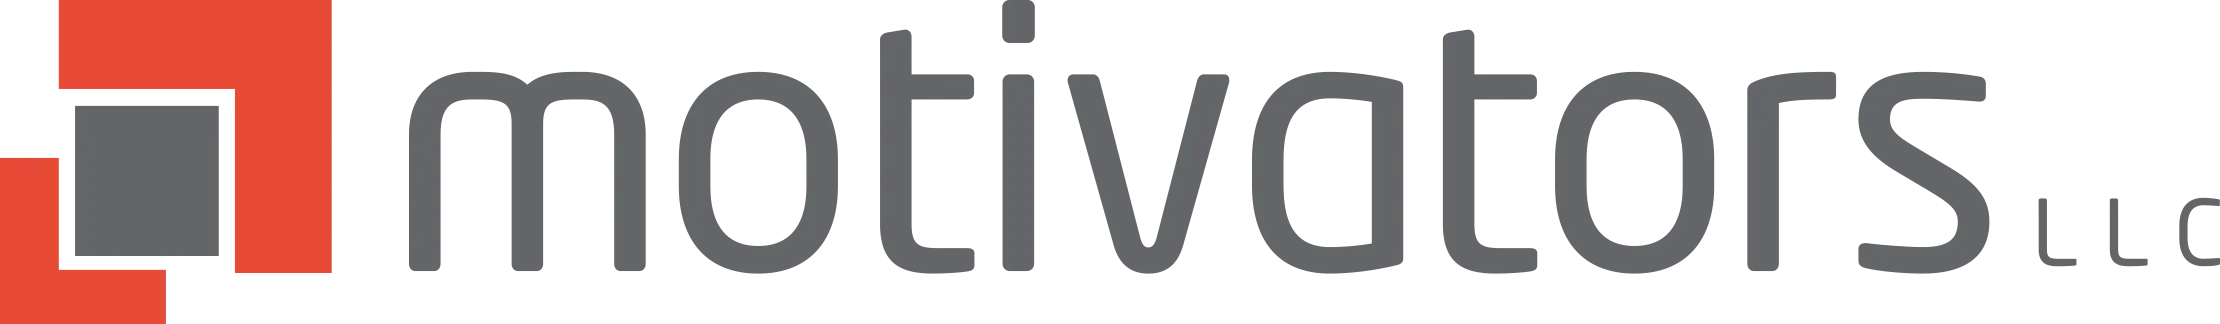 Motivators logo